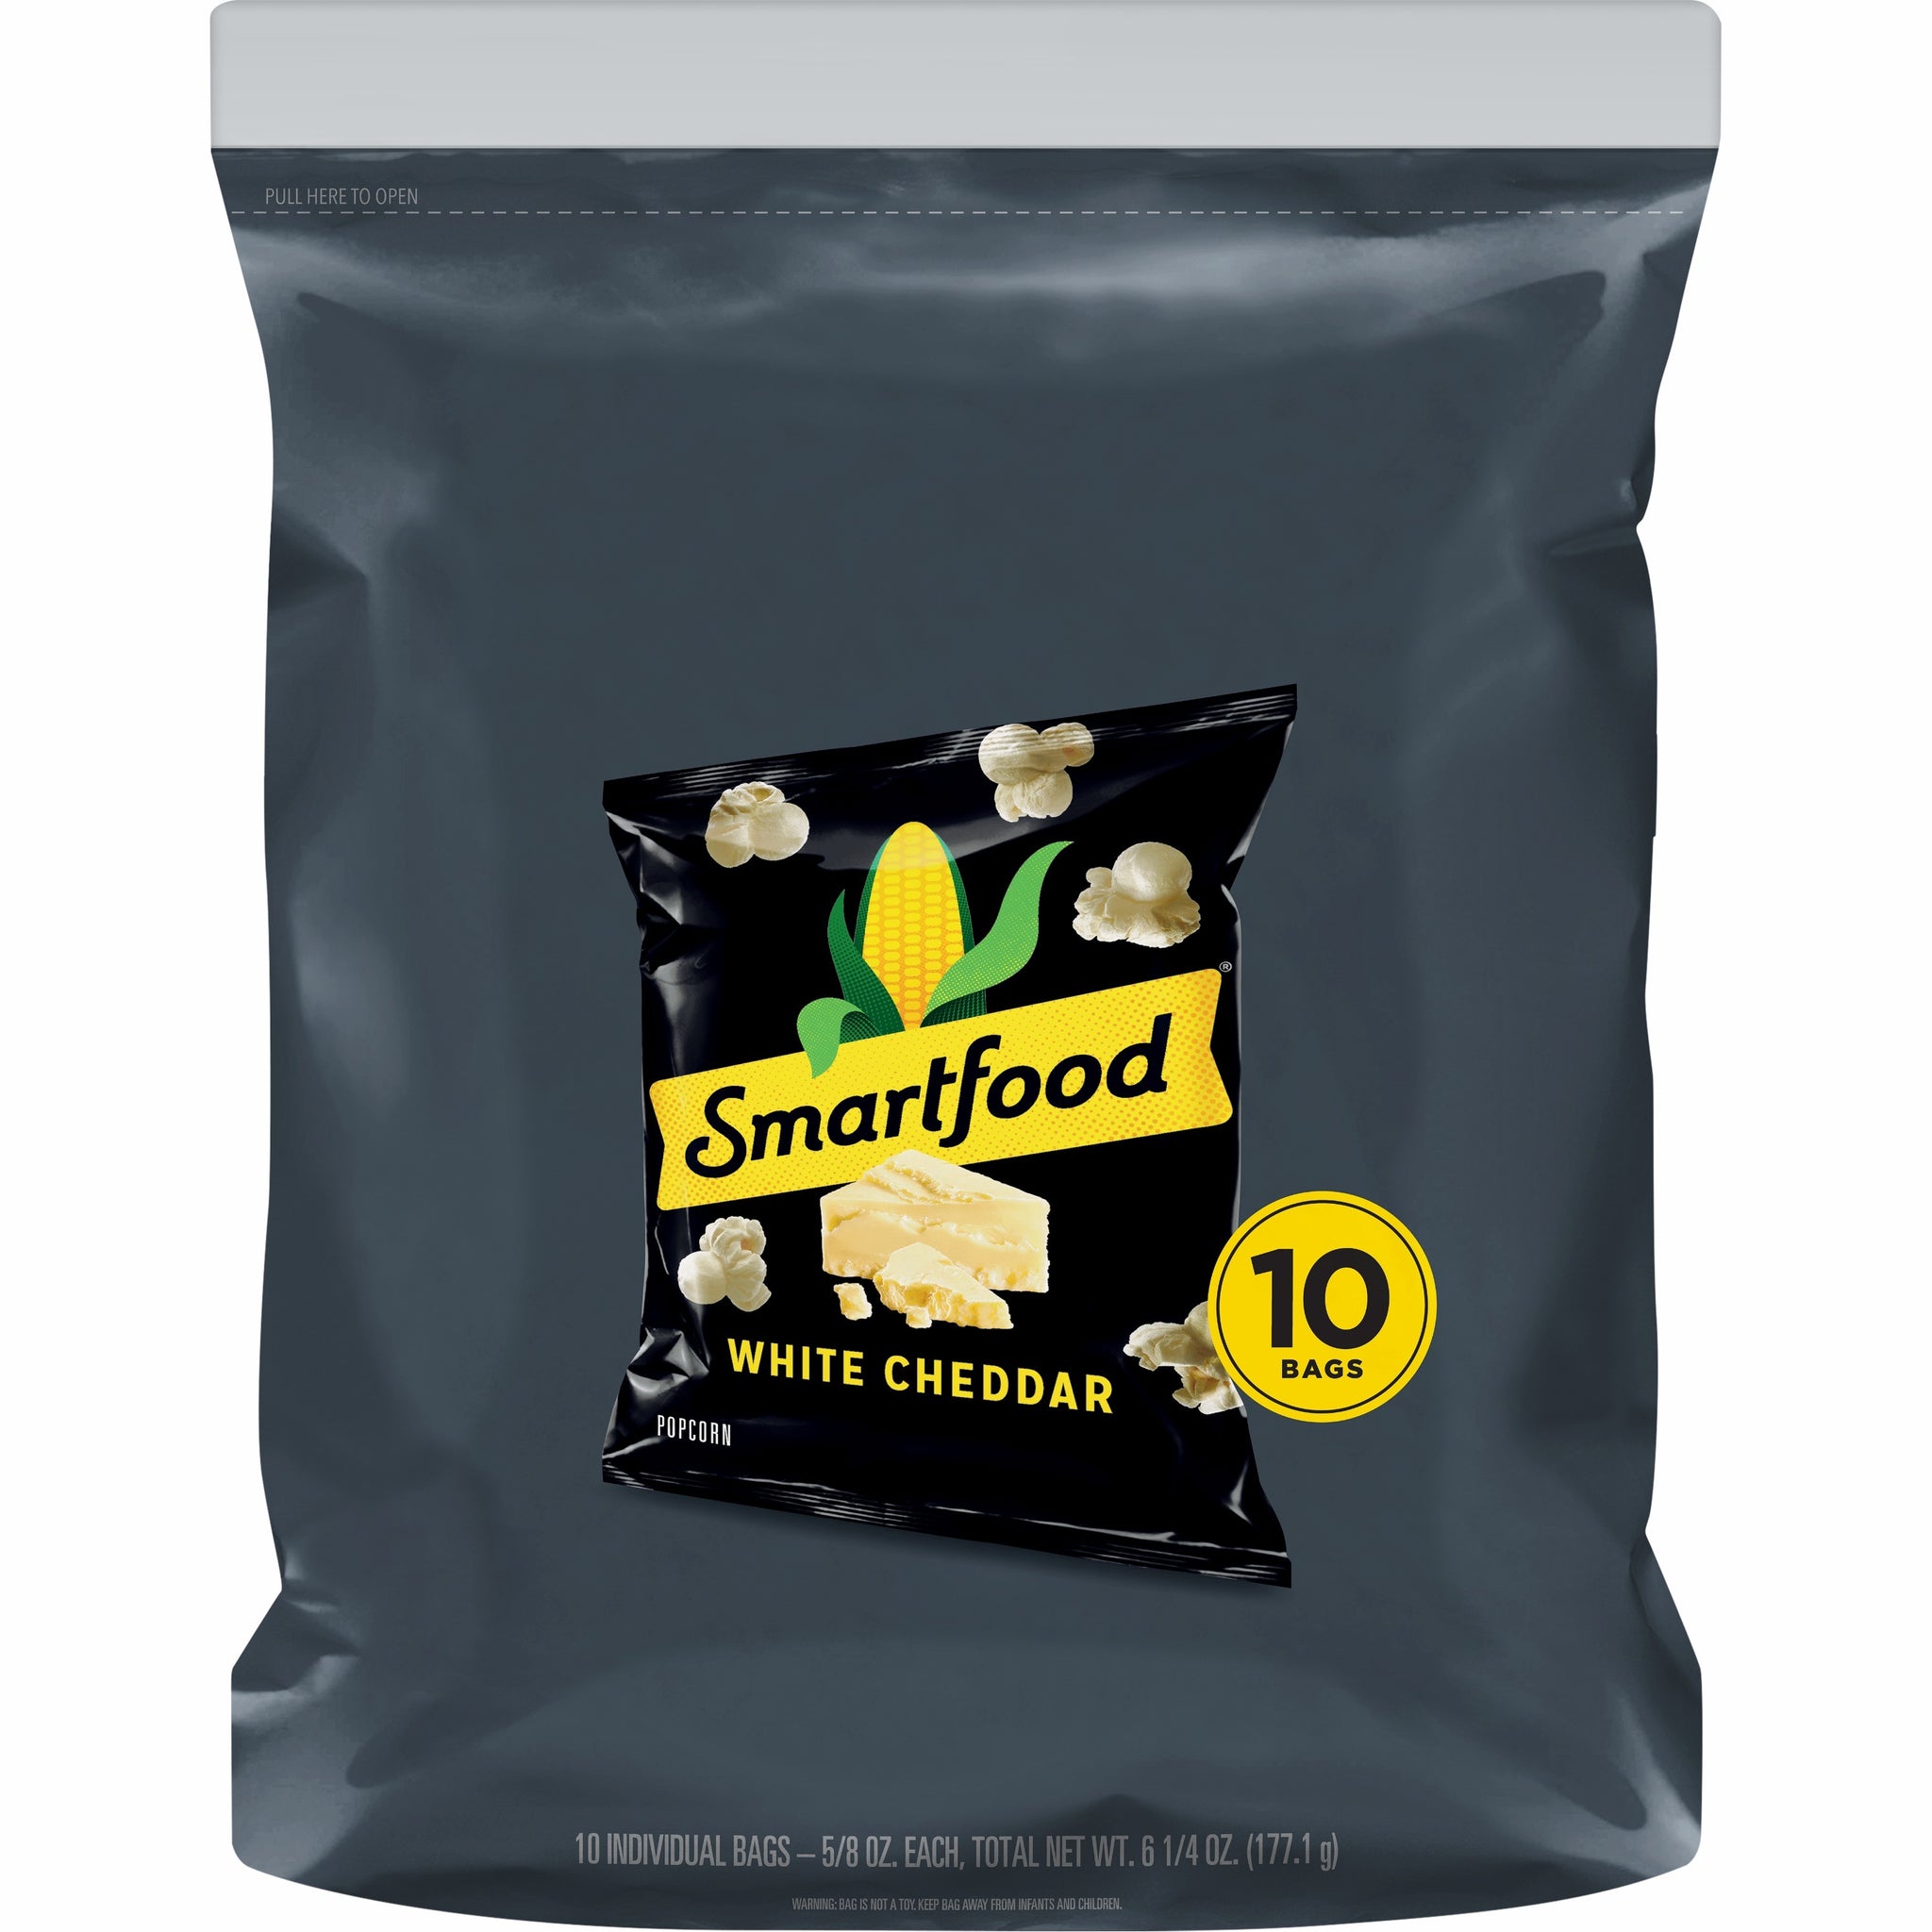 Smartfood White Cheddar Popcorn, Bags, 10 Count